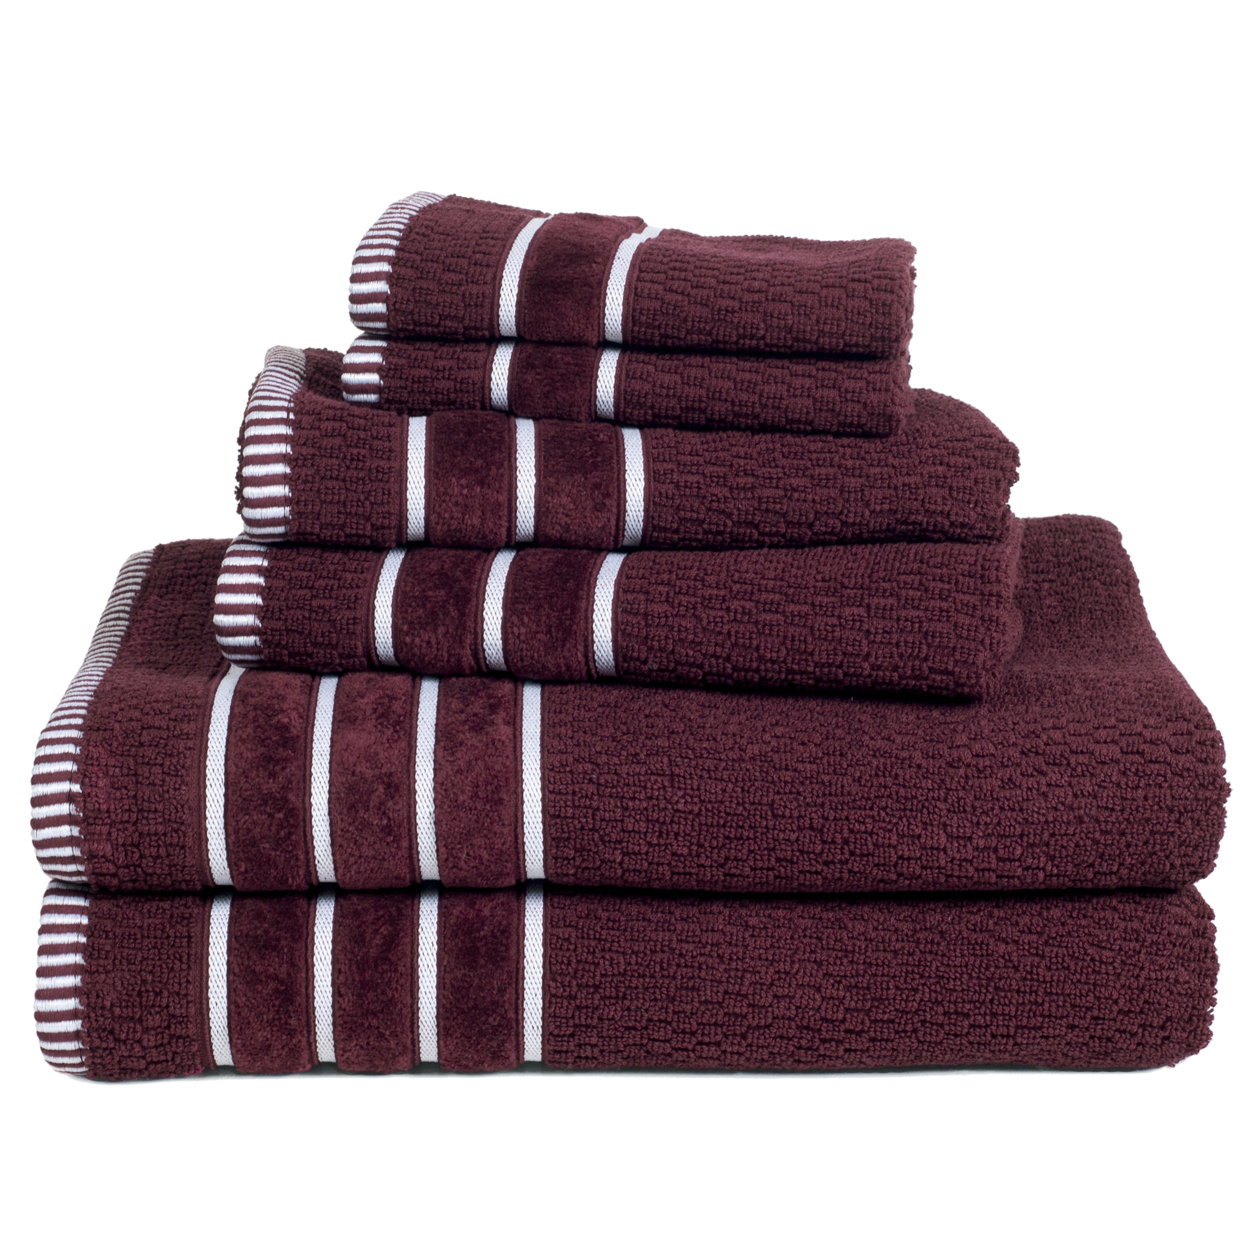 Lavish Home 100% Cotton Rice Weave 6 Piece Towel Set-Burgundy